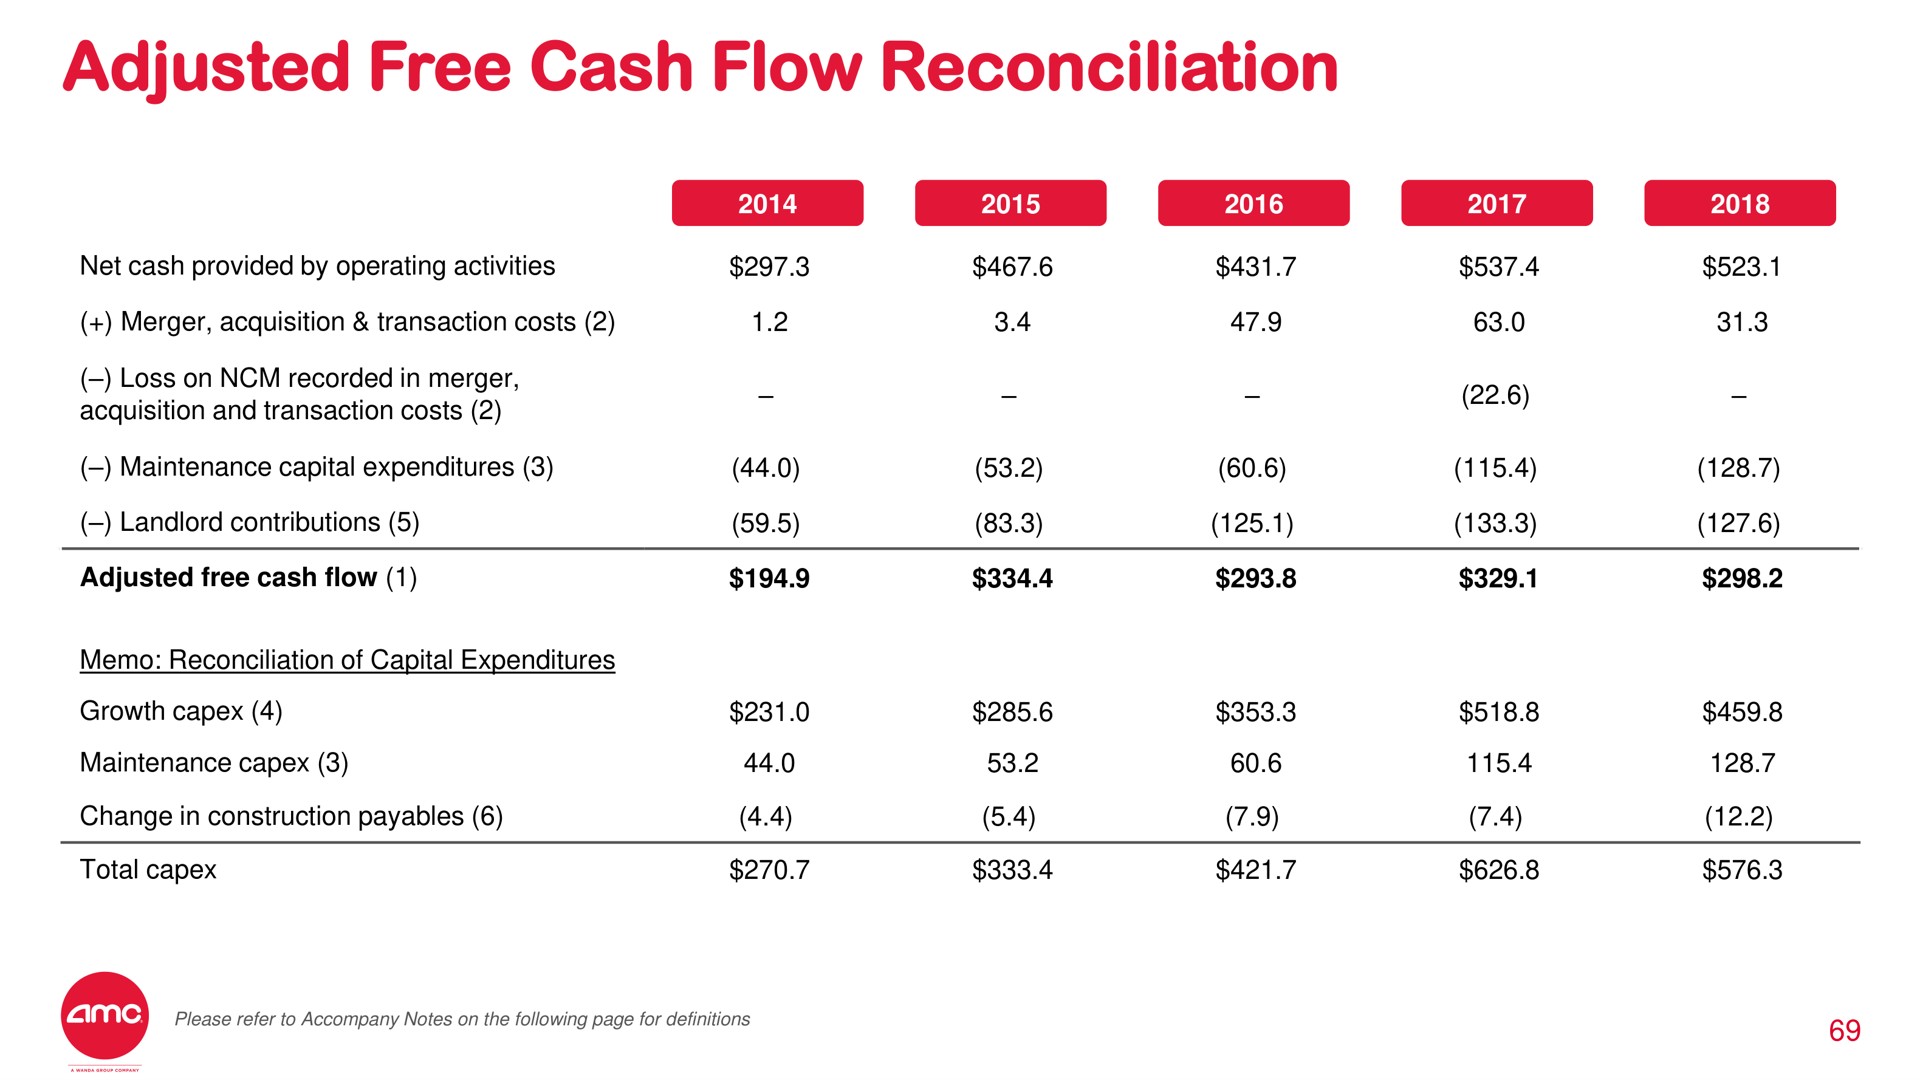 adjusted free cash flow reconciliation | AMC